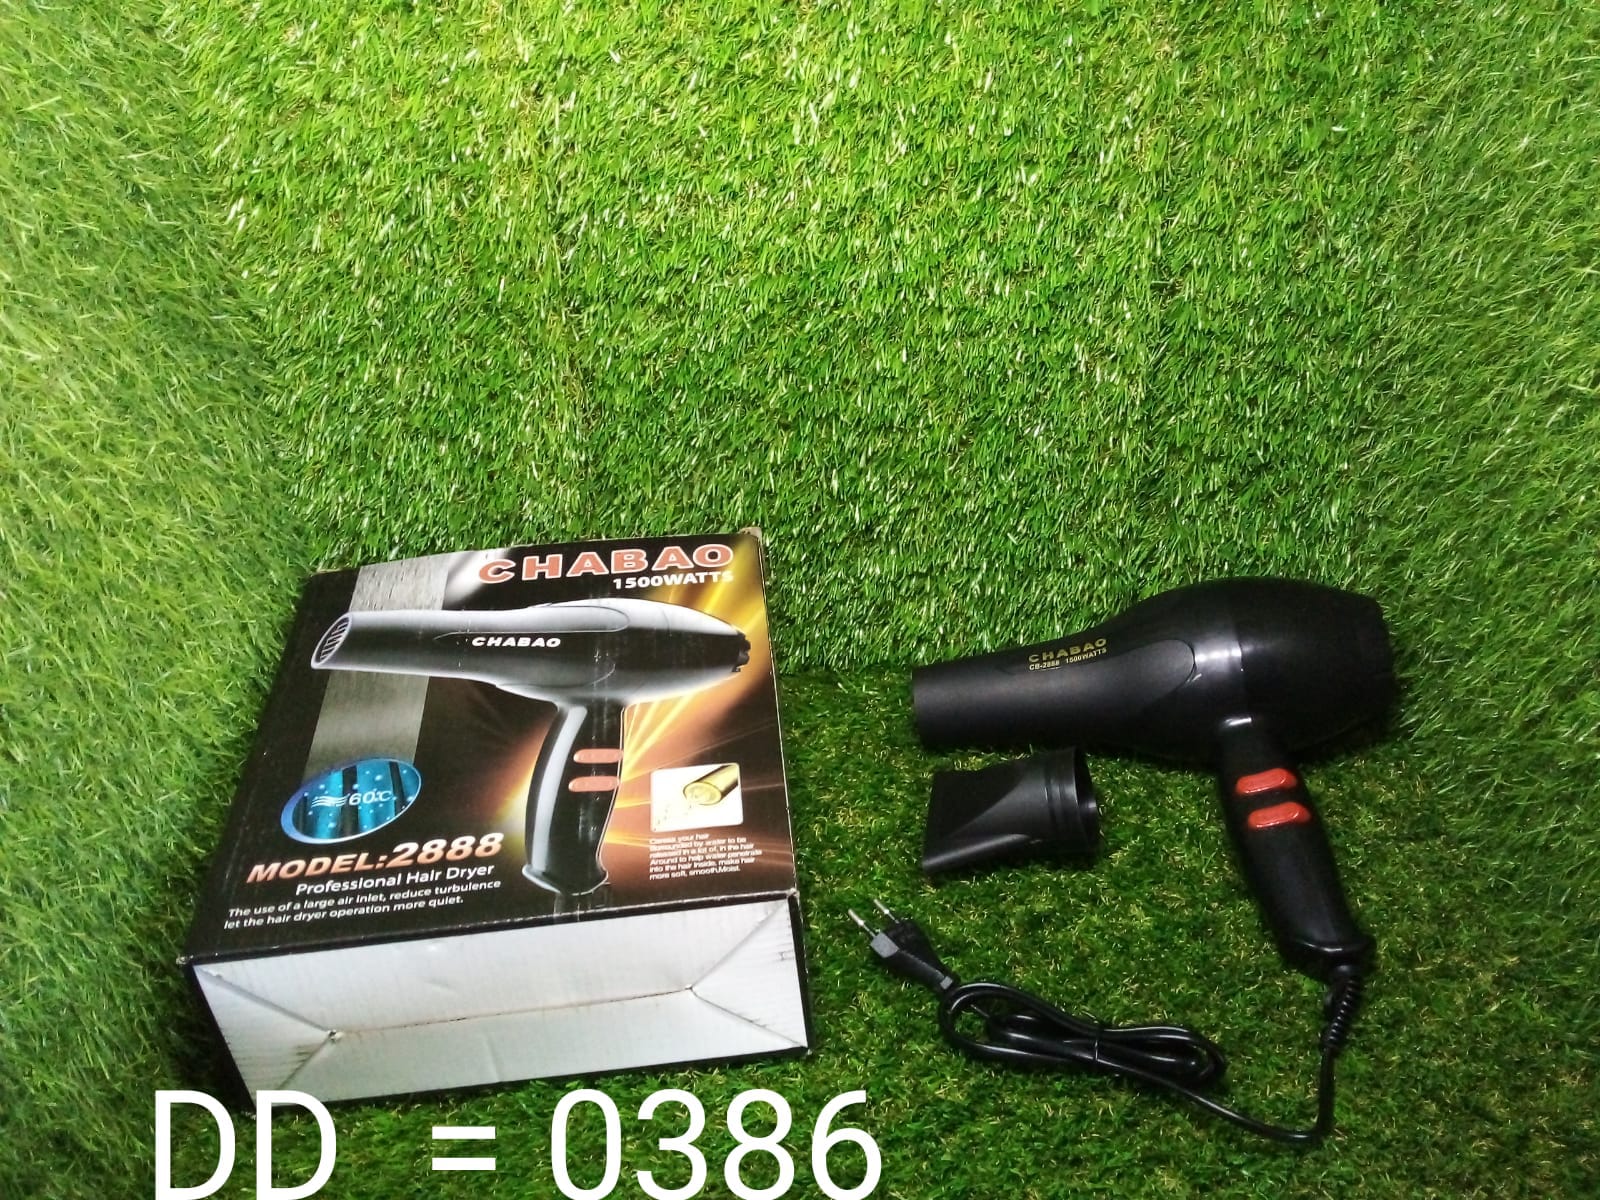 0386 1500 Watts Professional Hair Dryer 2888 (Black) 